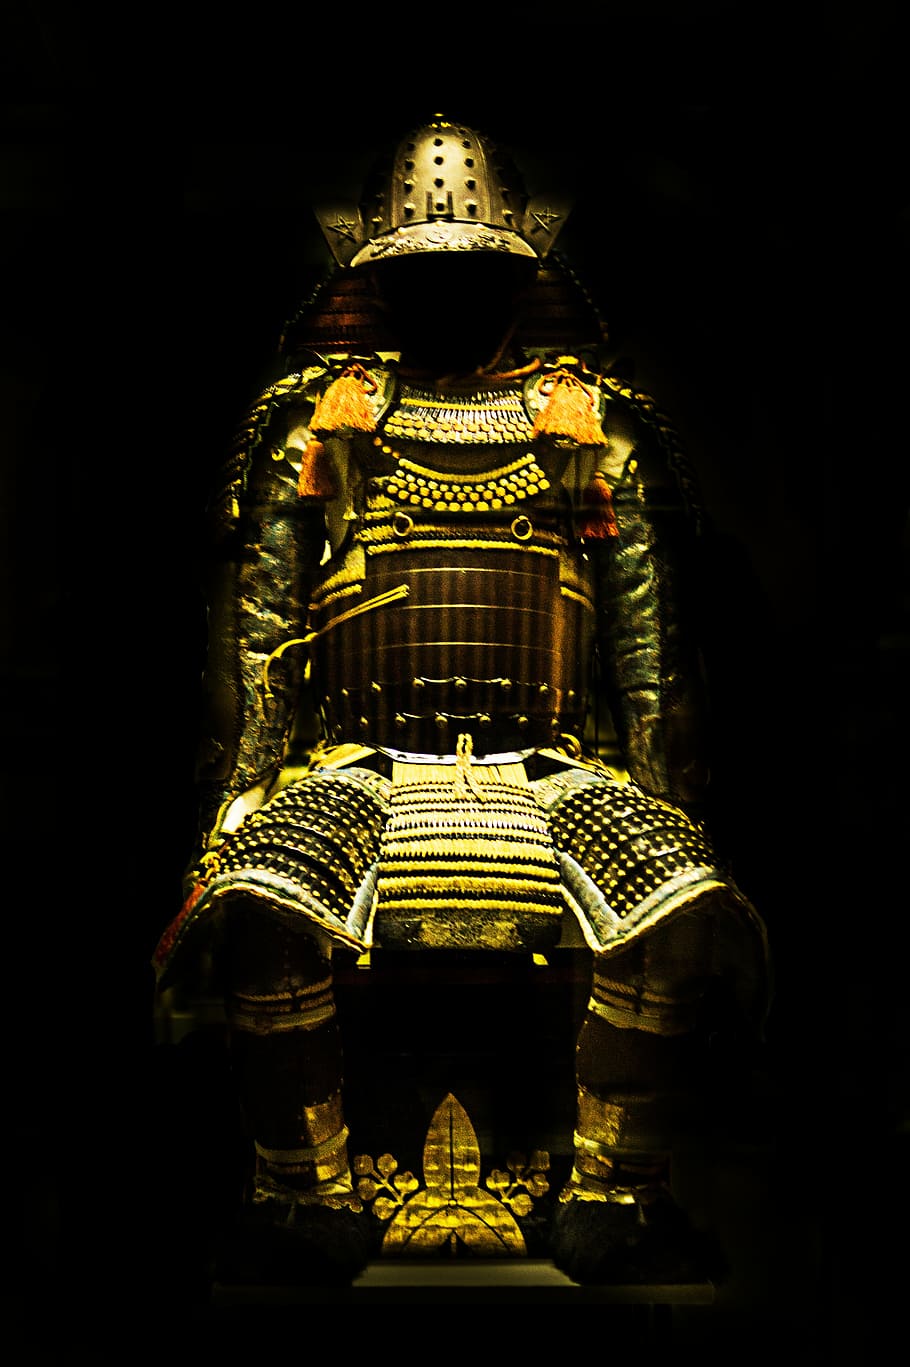 armadura de samurai amarillo, otomana, oro, estatua, samurai, armadura, color oro, sin gente, interiores, arquitectura